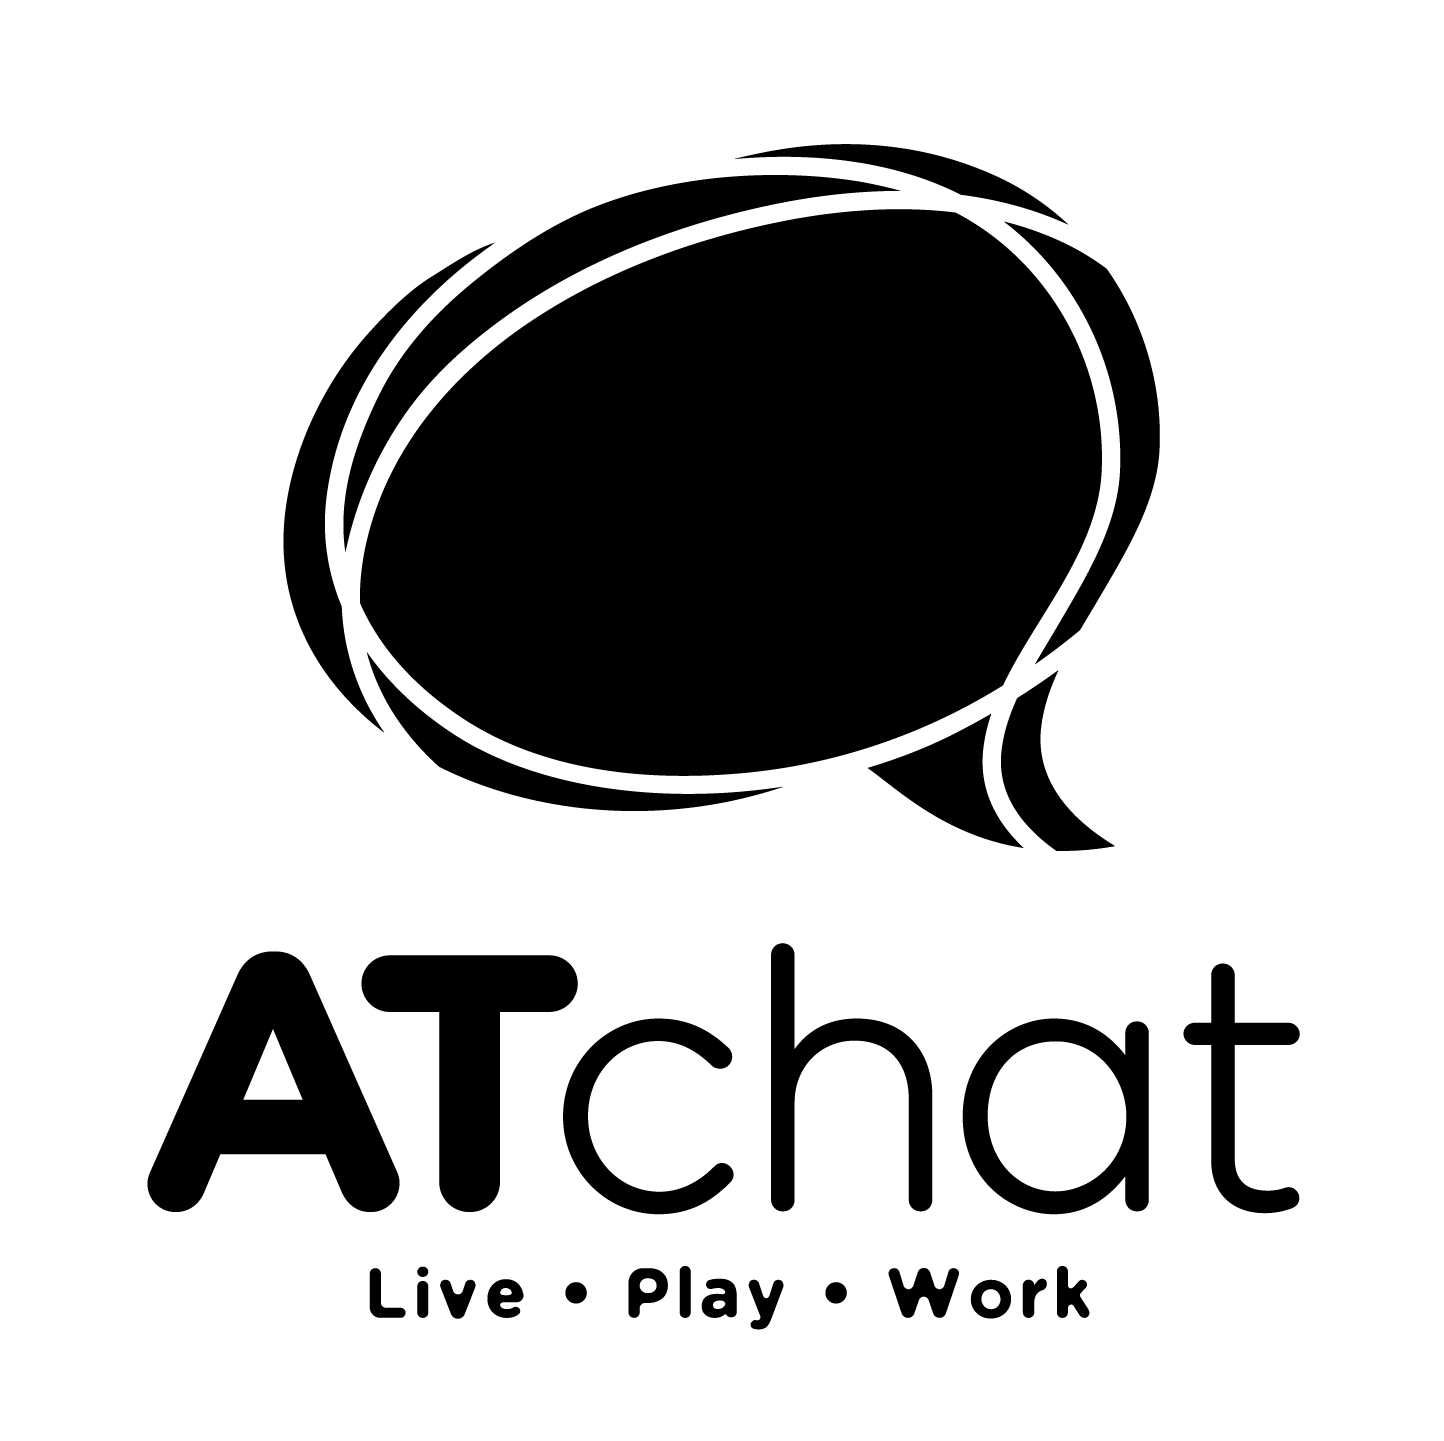 ATchat_Logo_Full_Vert (002)